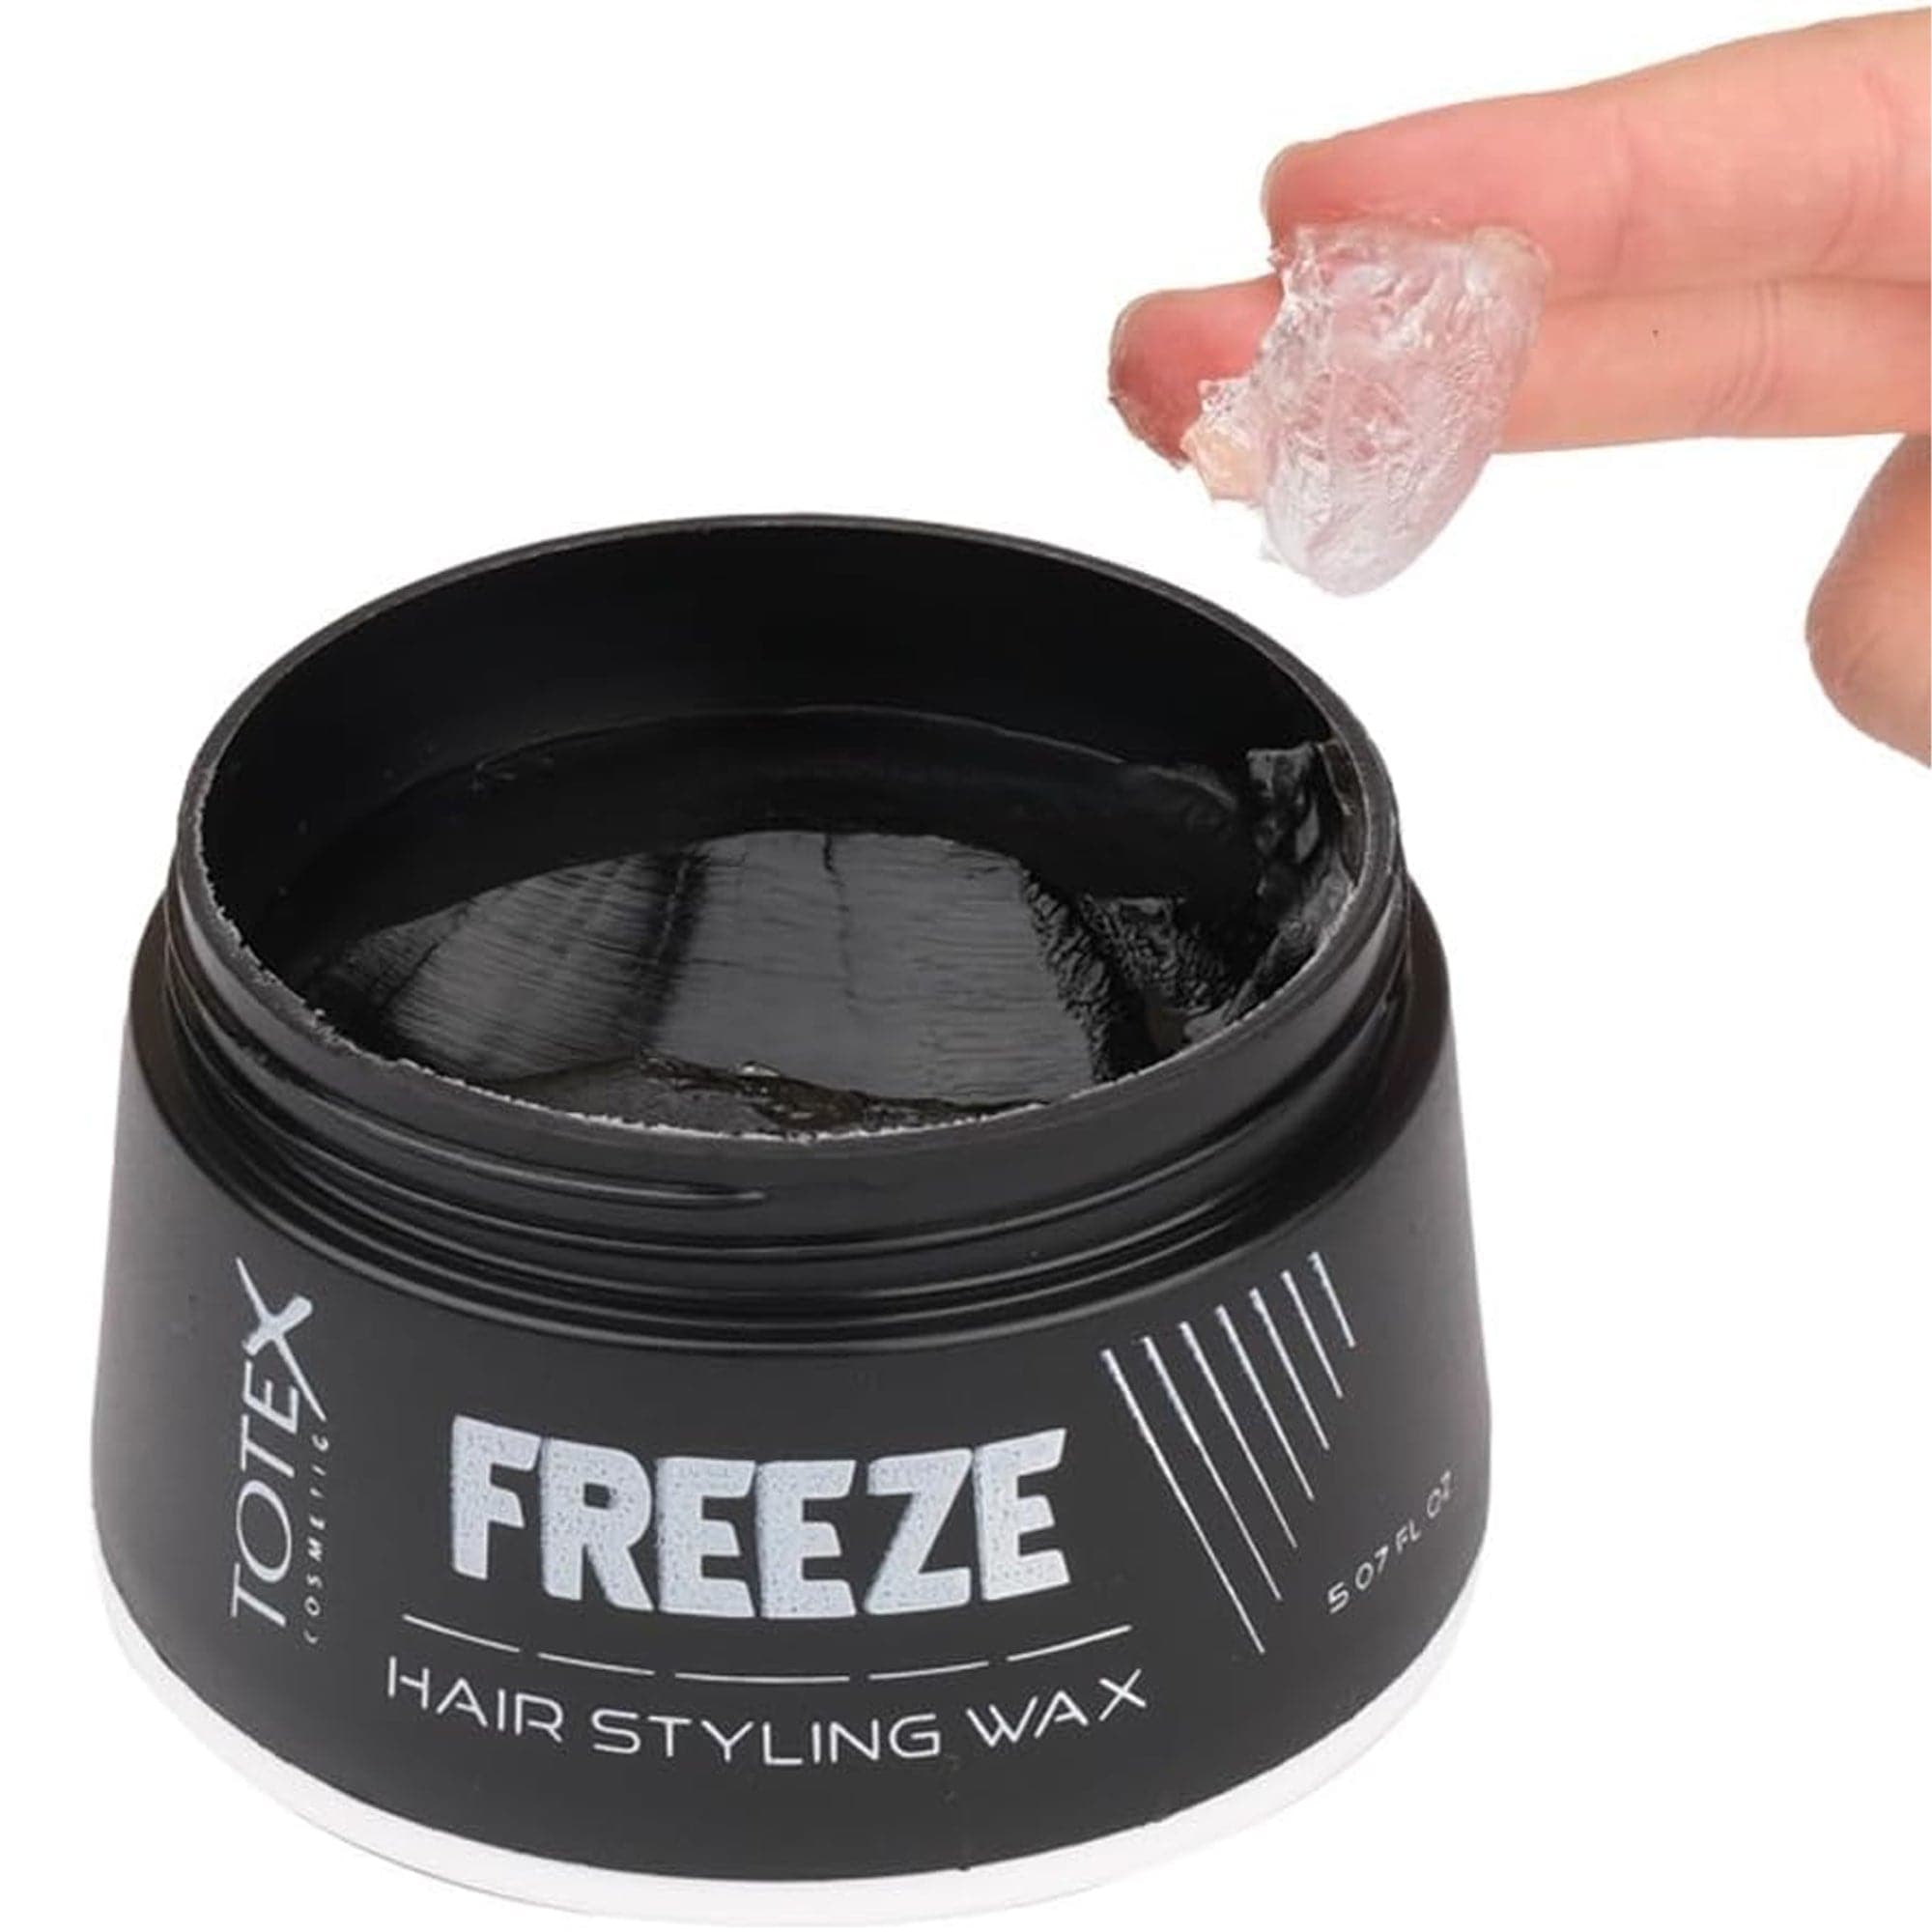 Totex - Hair Styling Wax Freeze 150ml